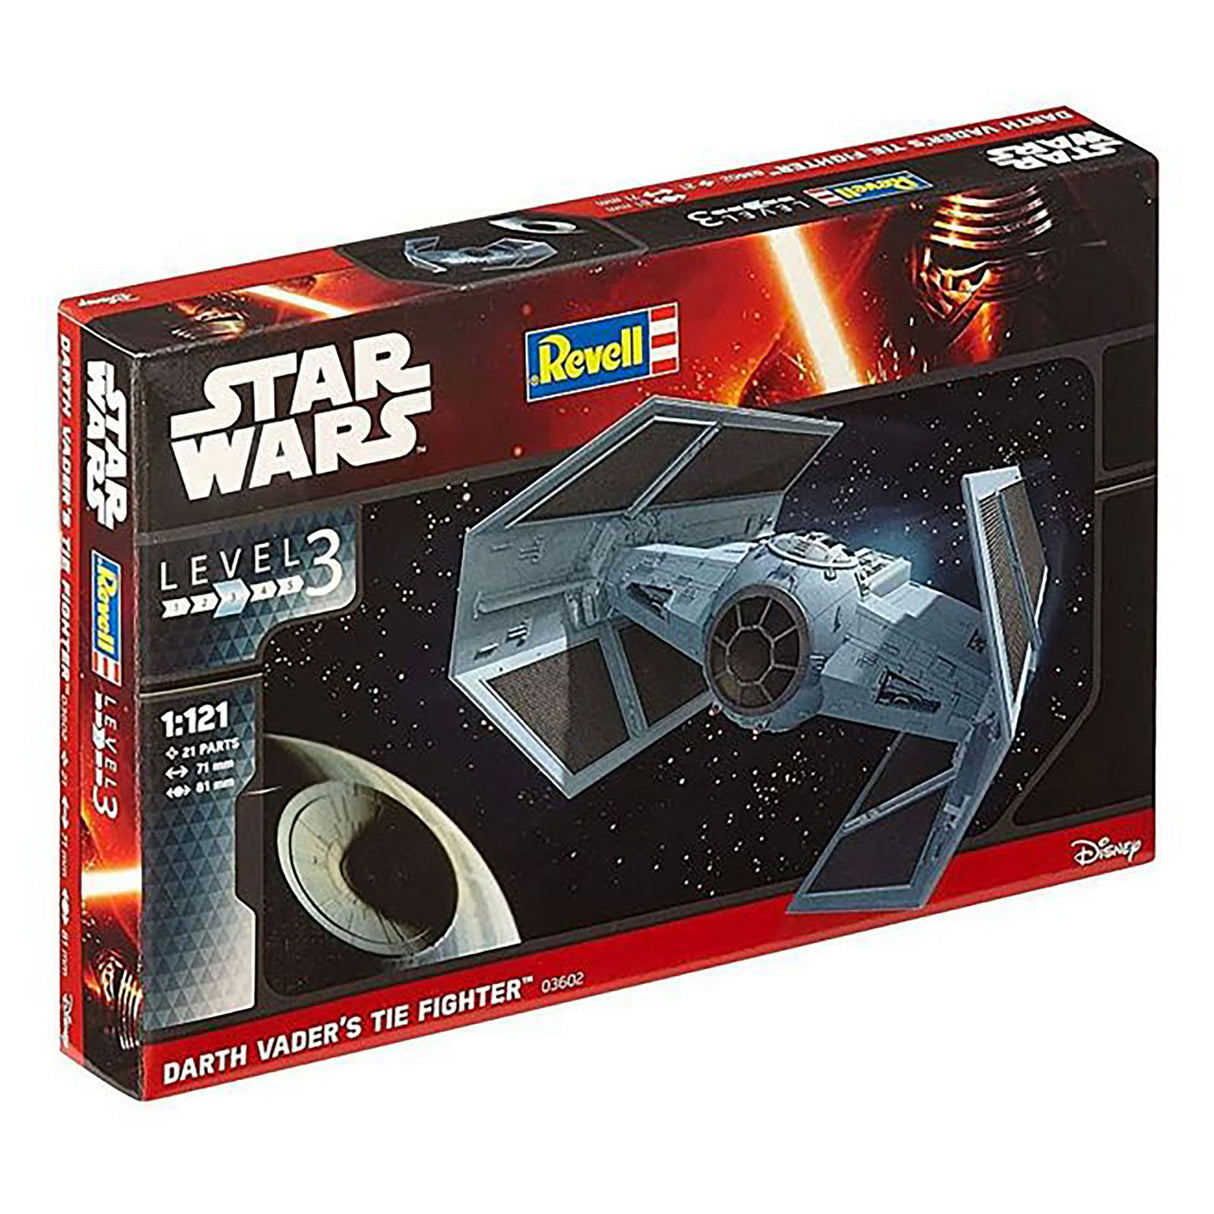 Star Wars Darth Vader's Tie Fighter 1:121 Replica Model Kit